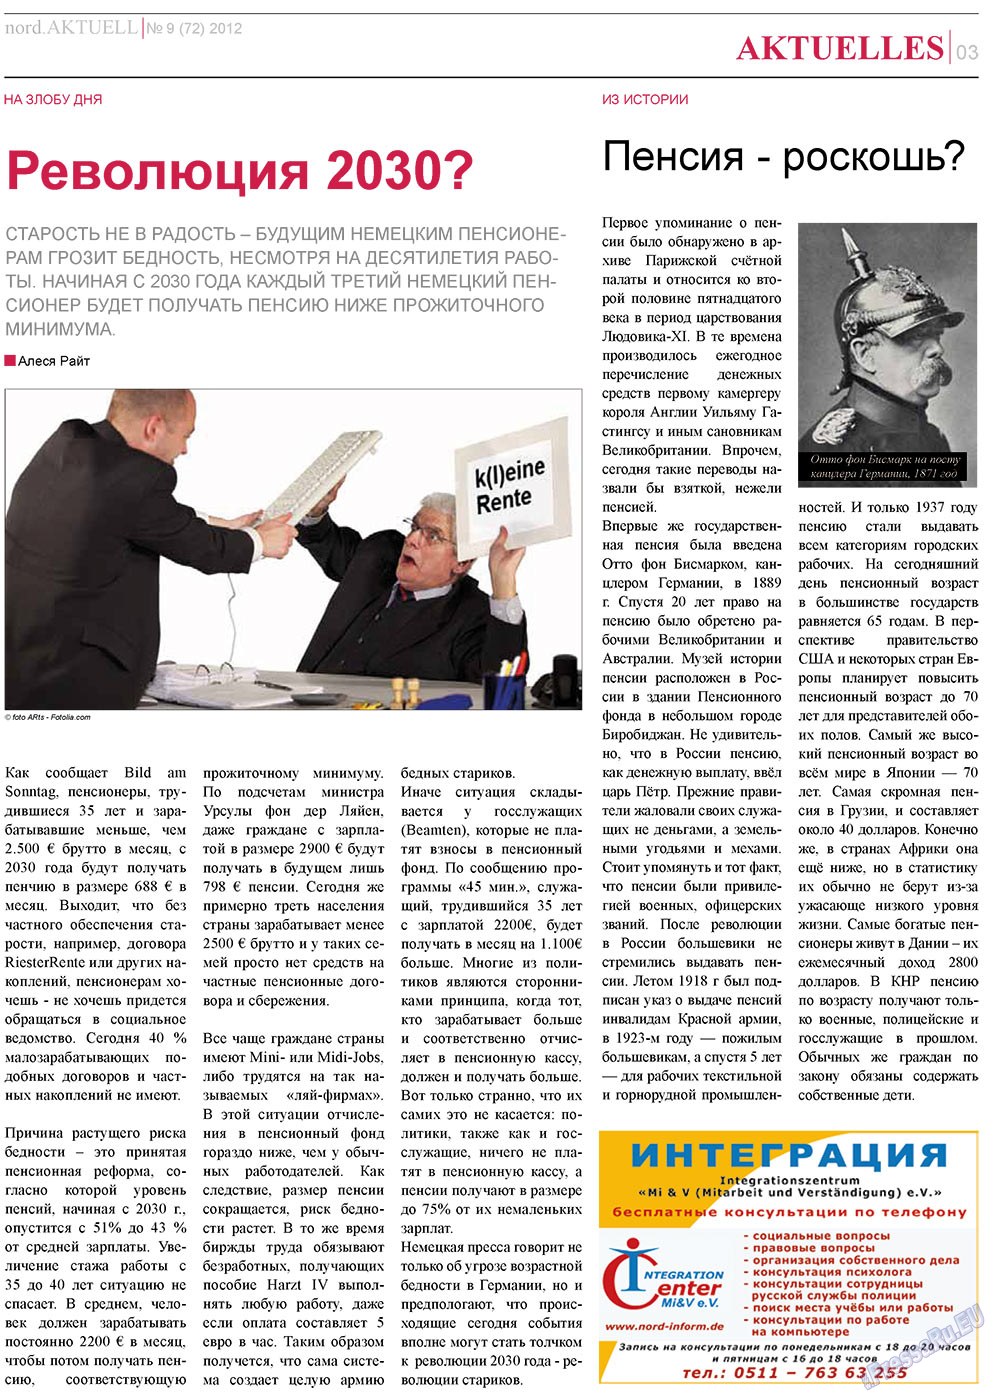 nord.Aktuell, газета. 2012 №9 стр.3